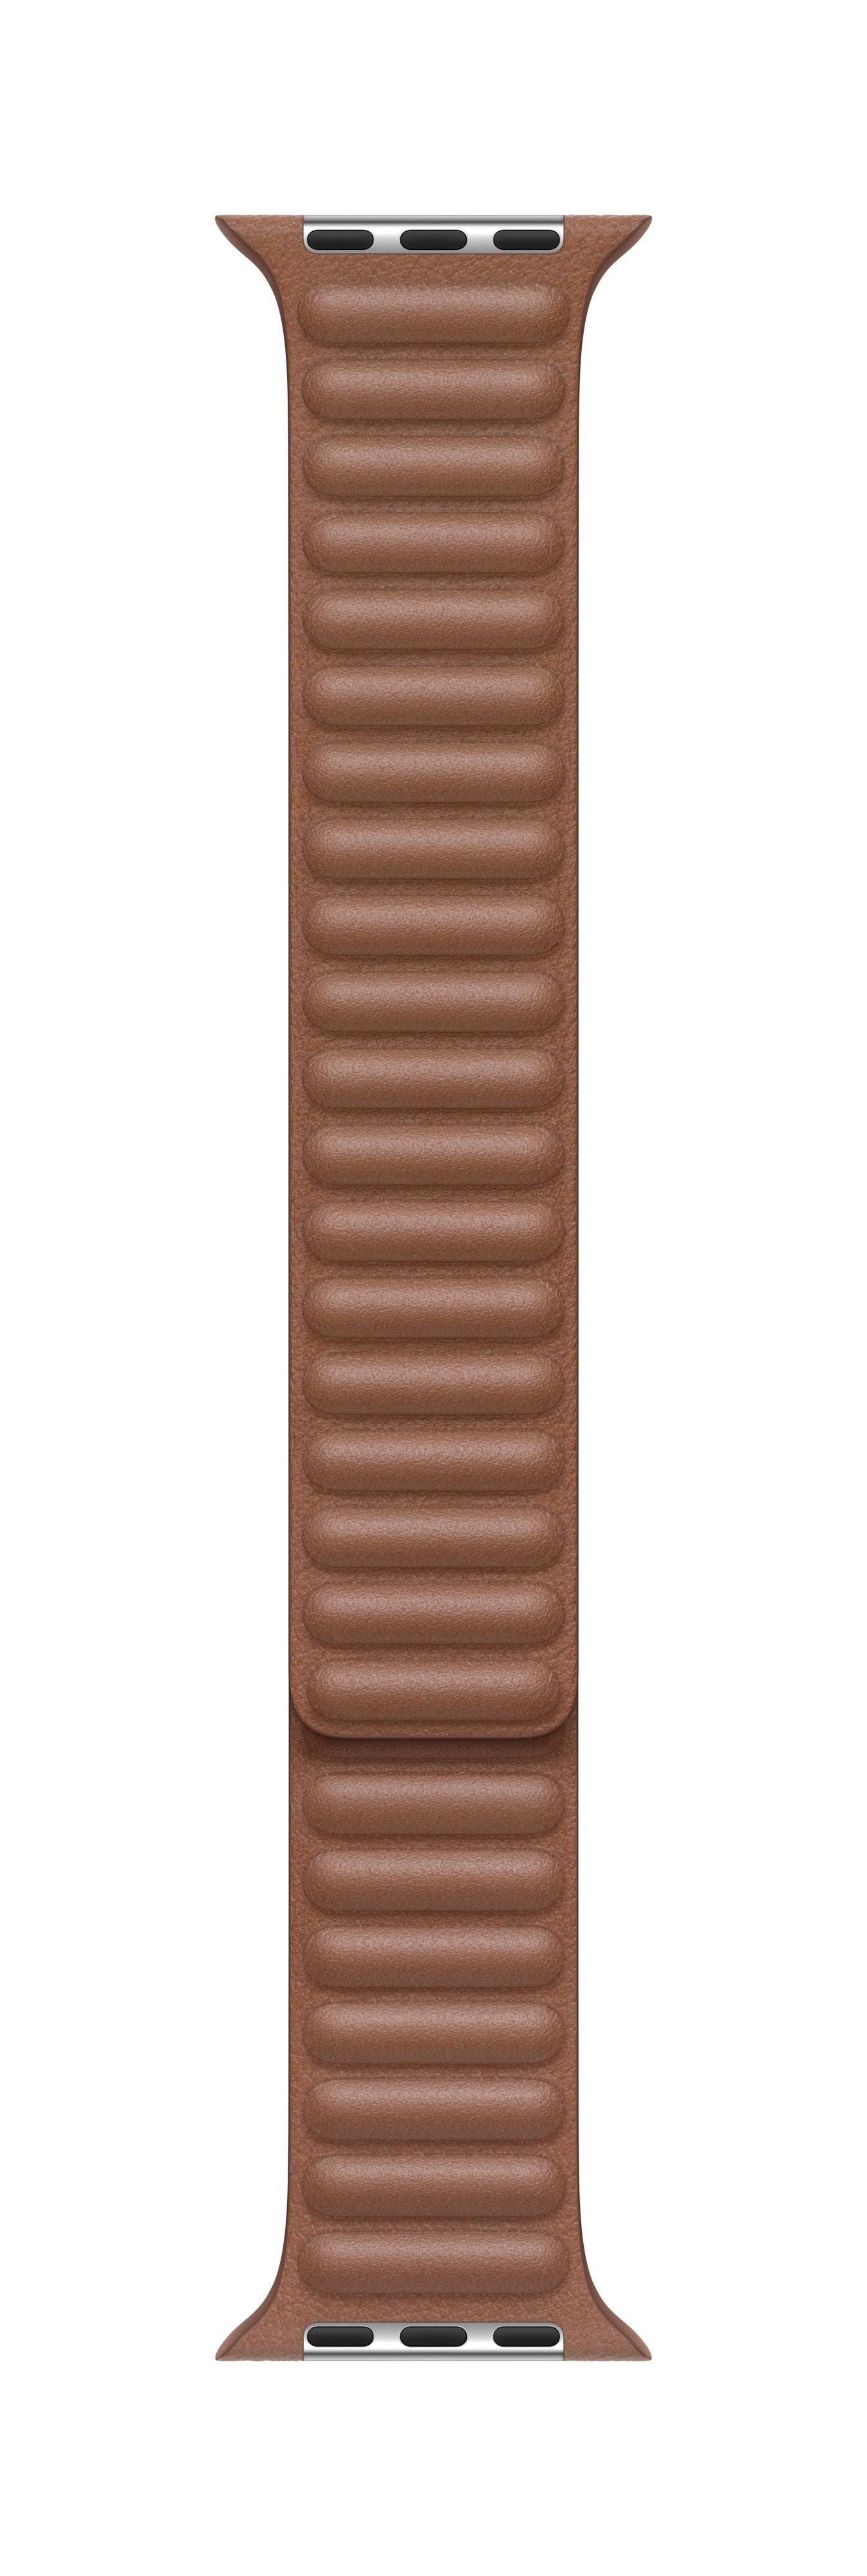 40mm Saddle Brown Leather Link - Large